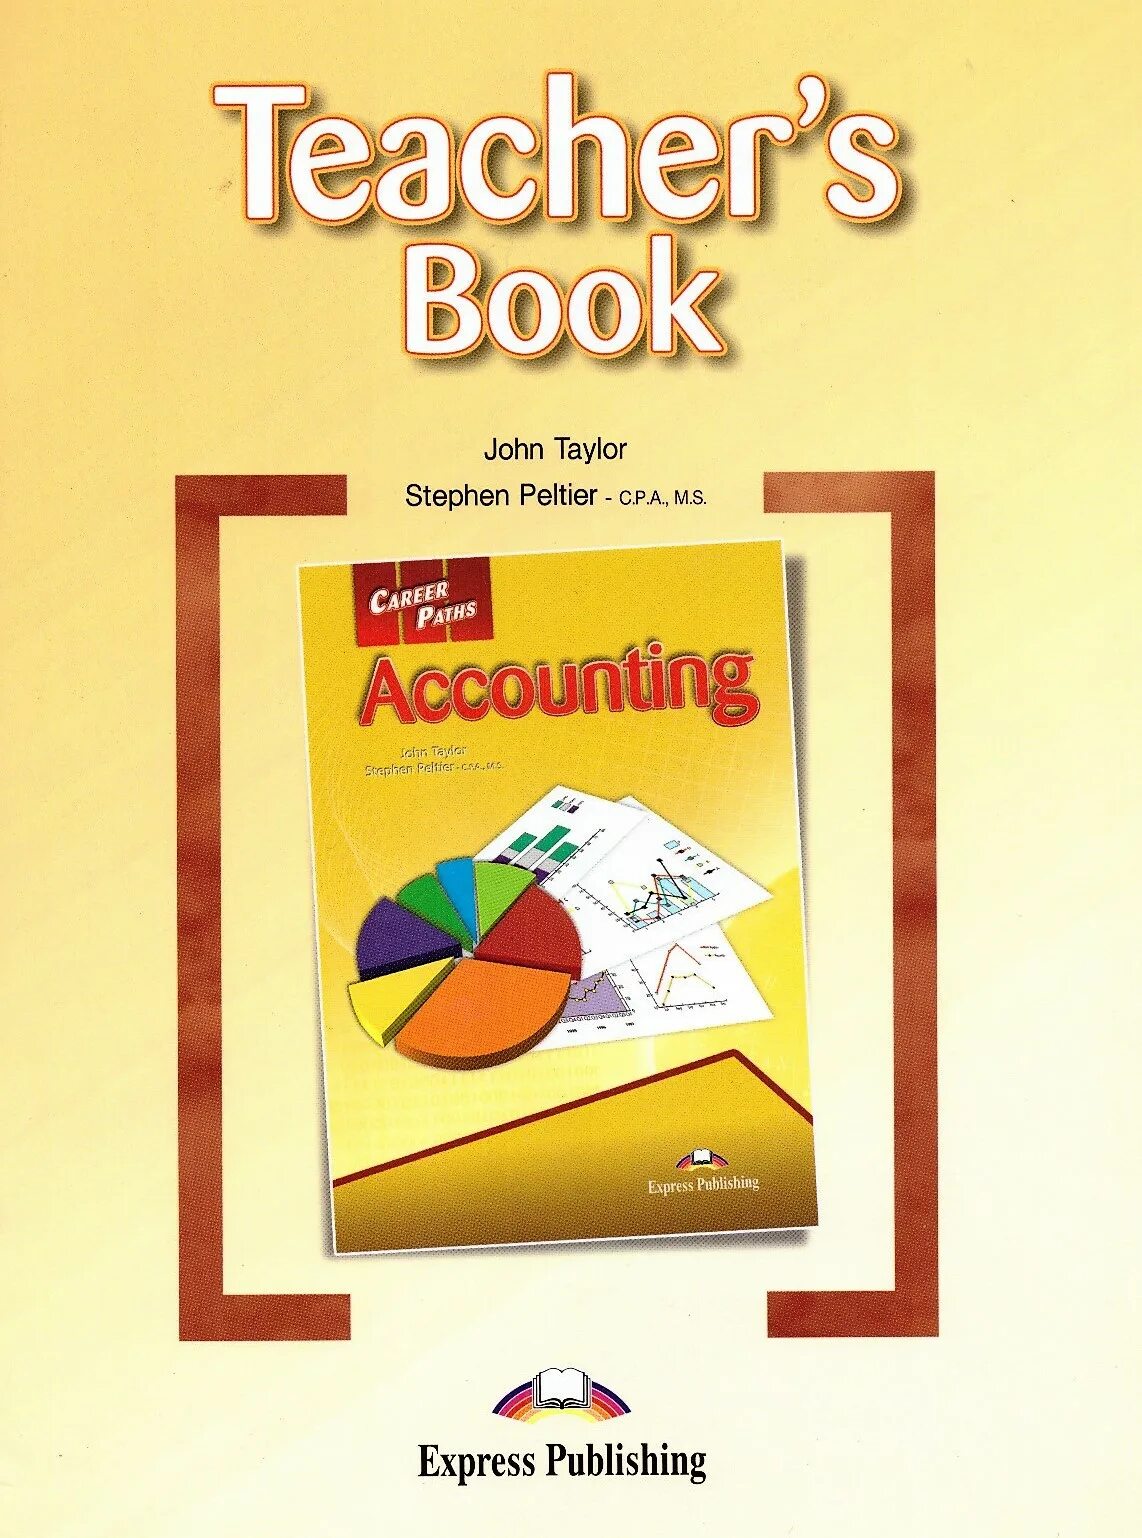 Accounting book. Teacher Guide. Career Paths Accounting ответы. Career Paths Accounting teacher's book. Career Path teacher book.